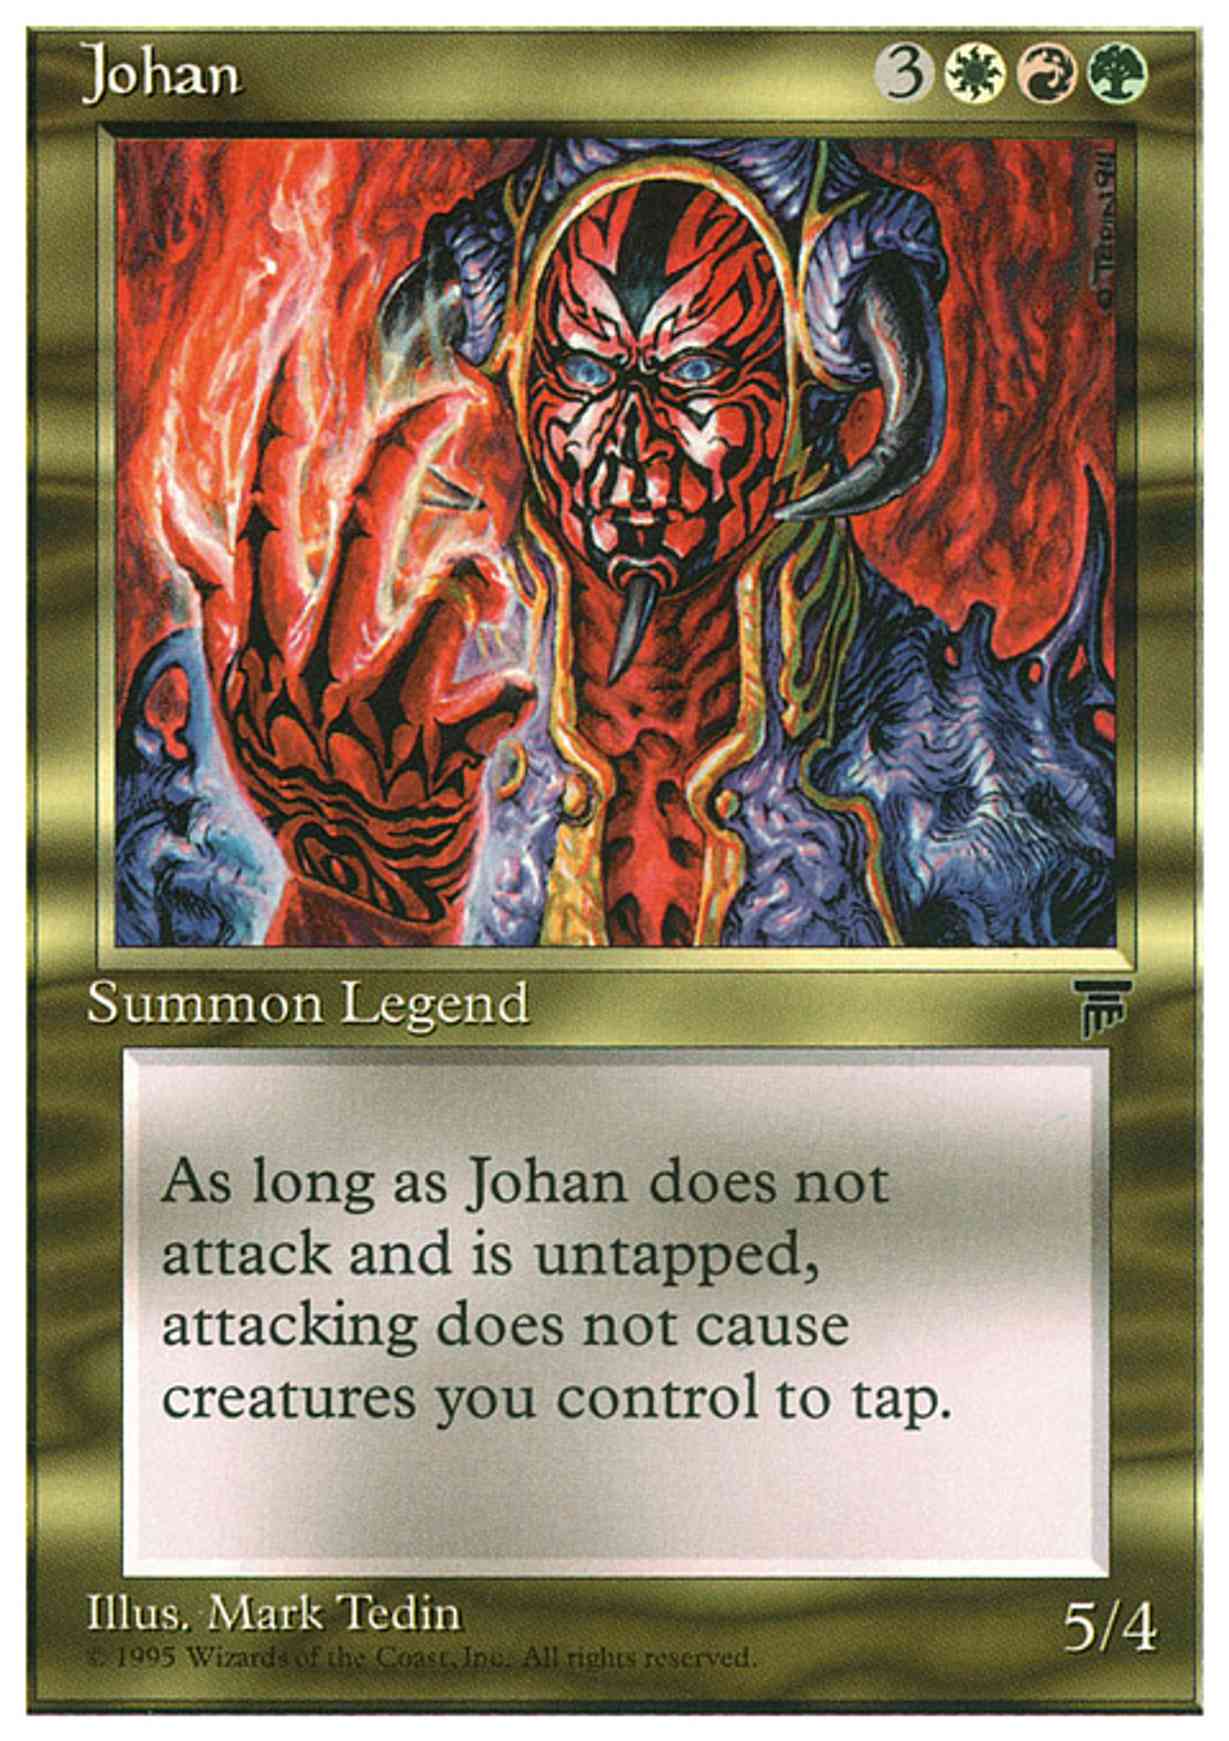 Johan magic card front